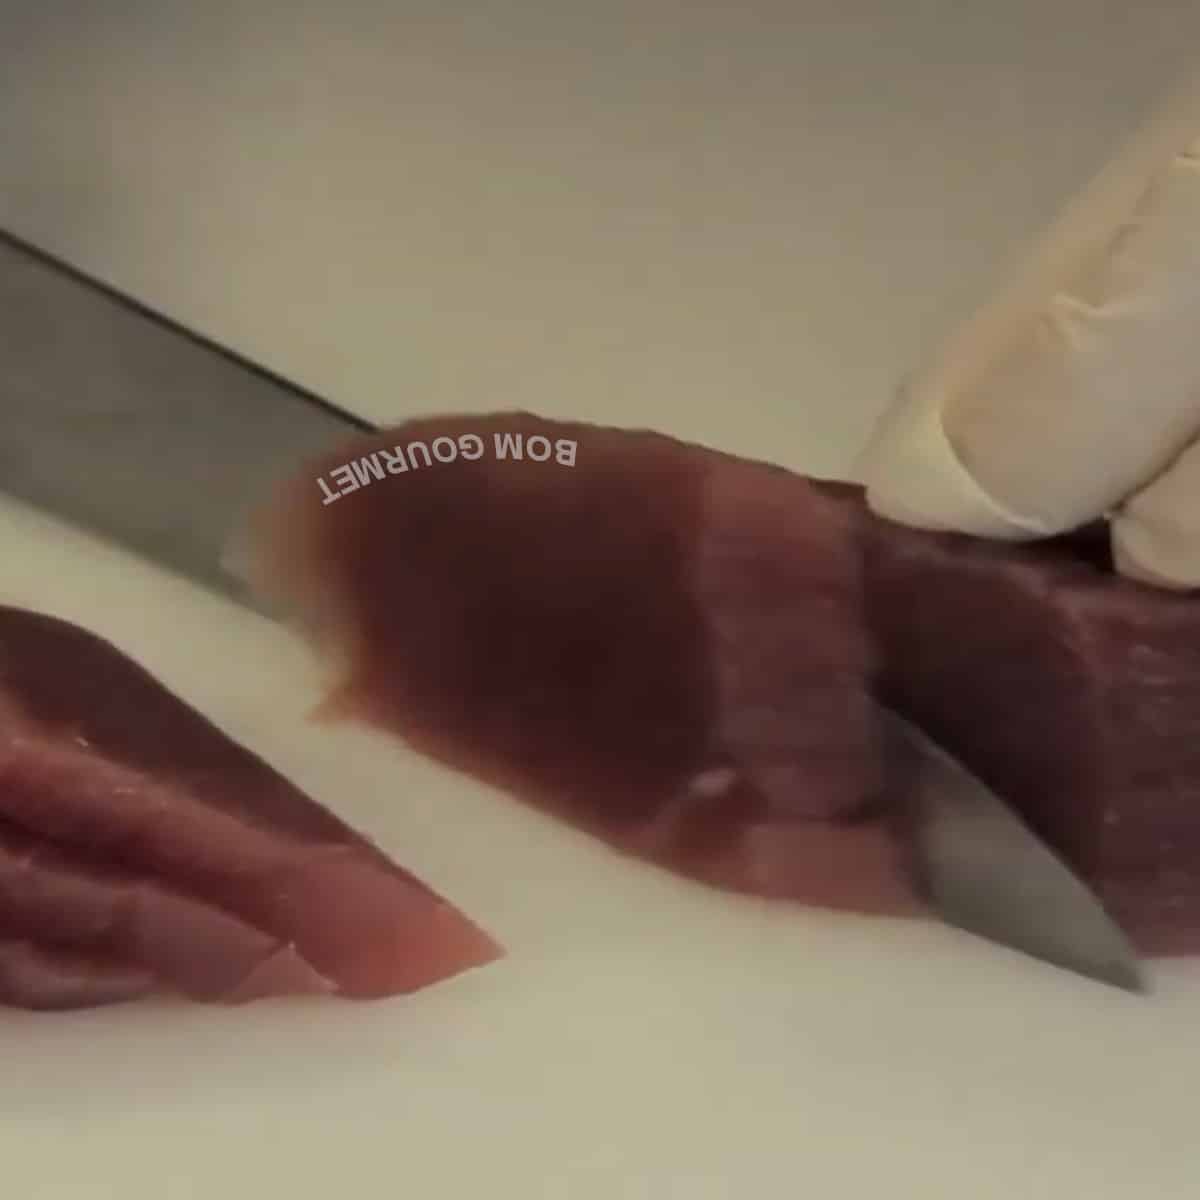 cortando sashimi de atum na diagonal